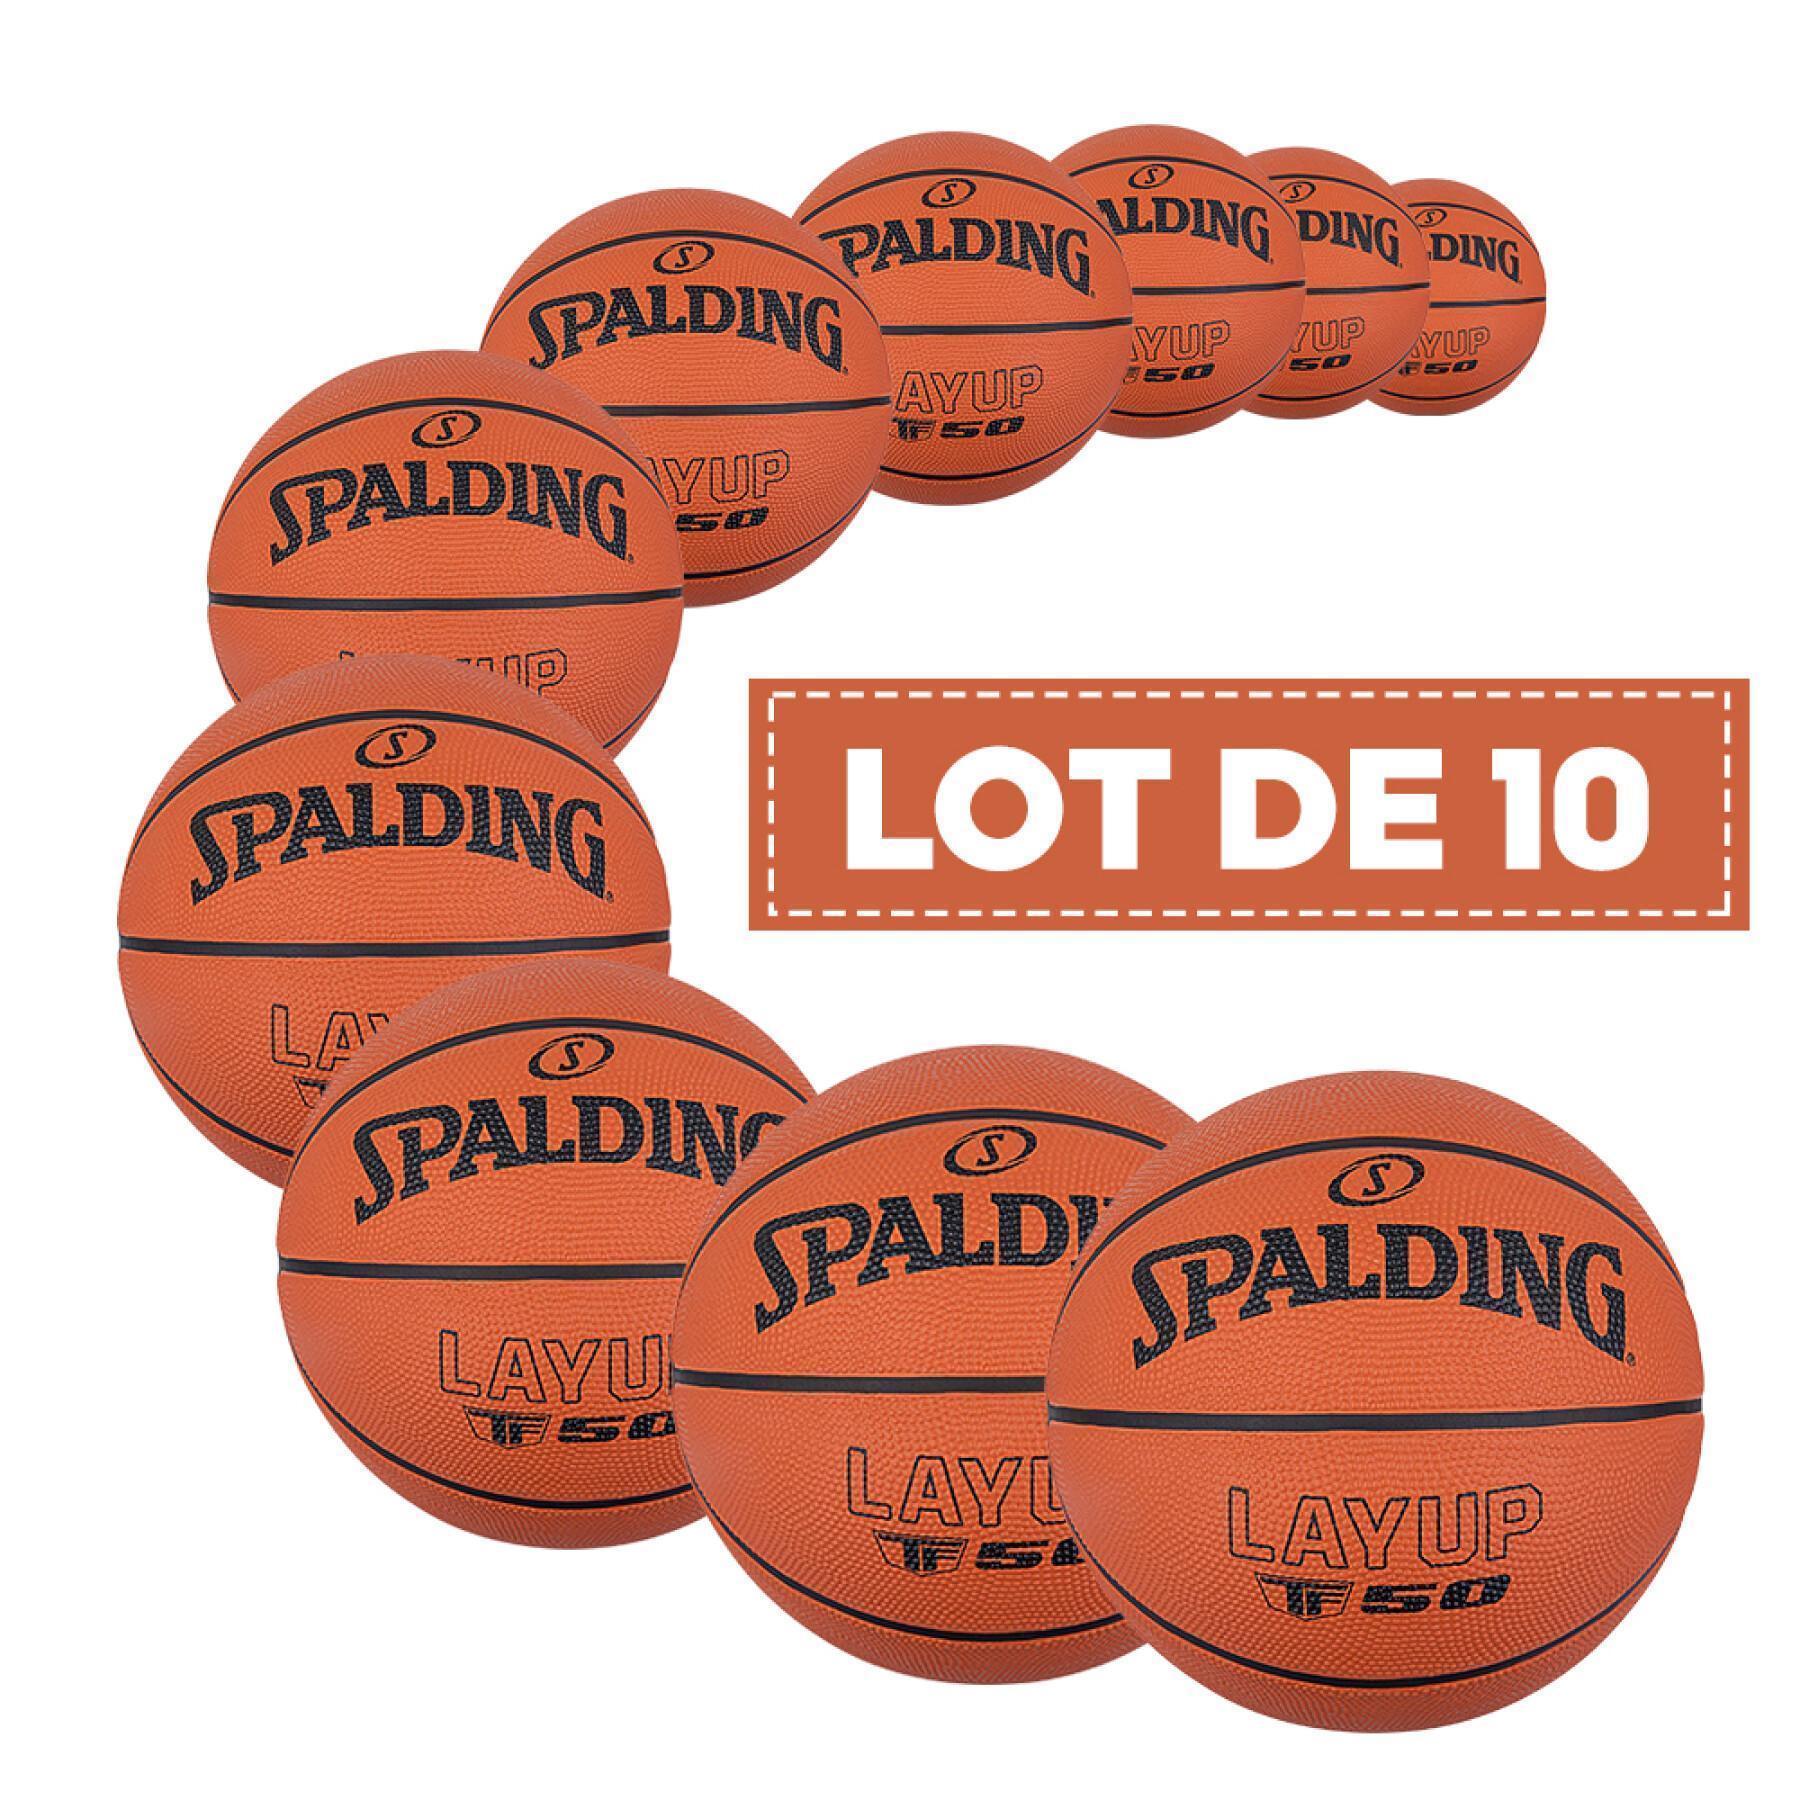 Lot de 10 Ballon Spalding Layup TF-50